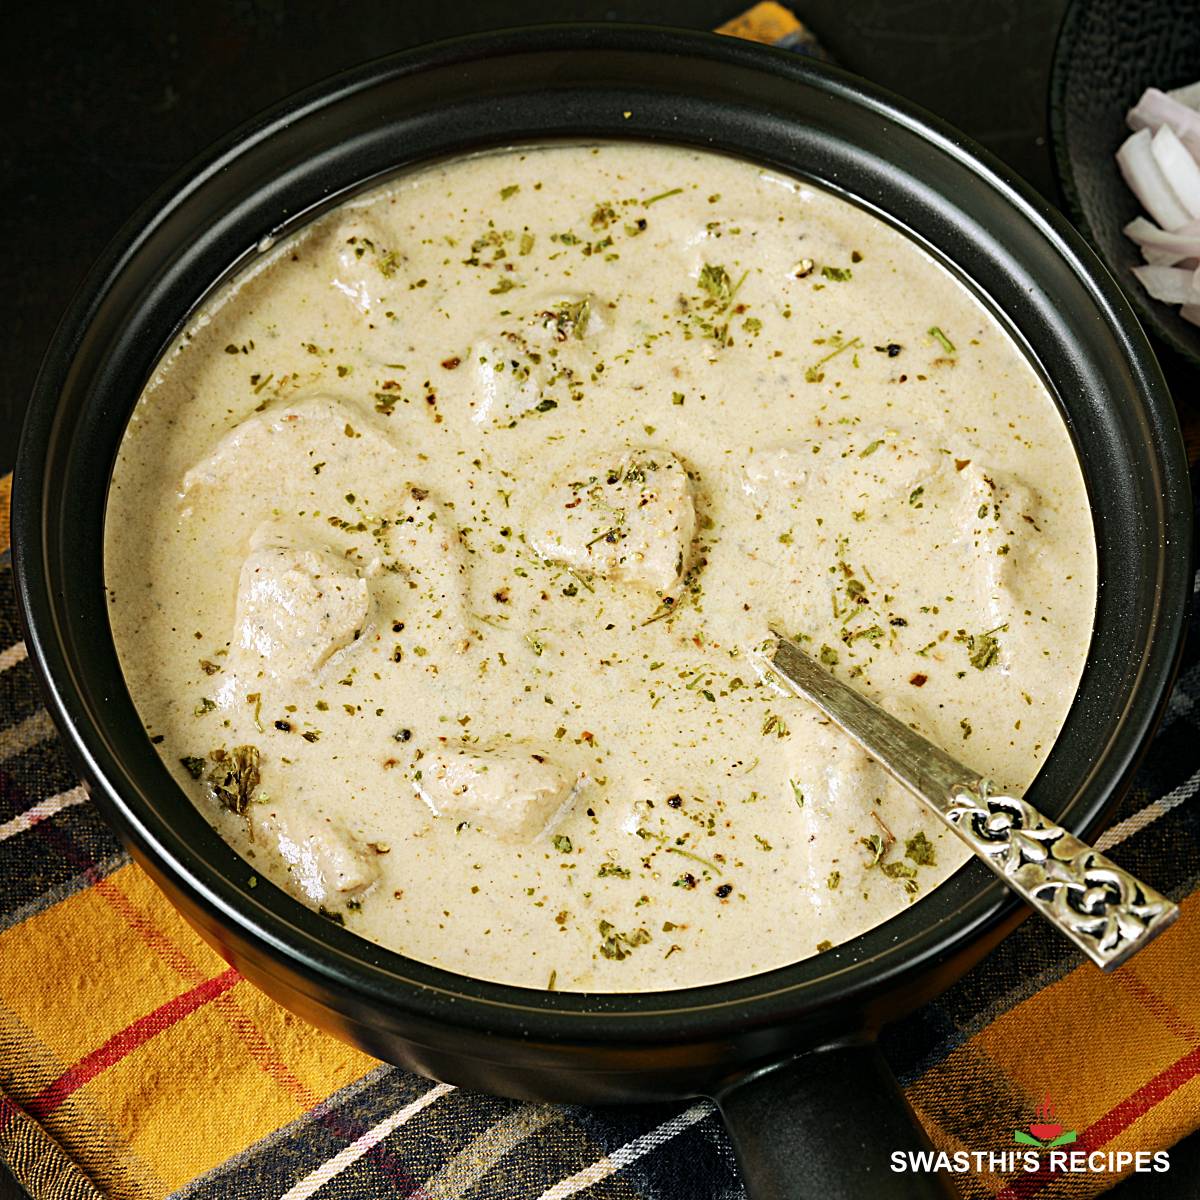 Malai Chicken Recipe (Creamy White Chicken Curry) - Swasthi's Recipes